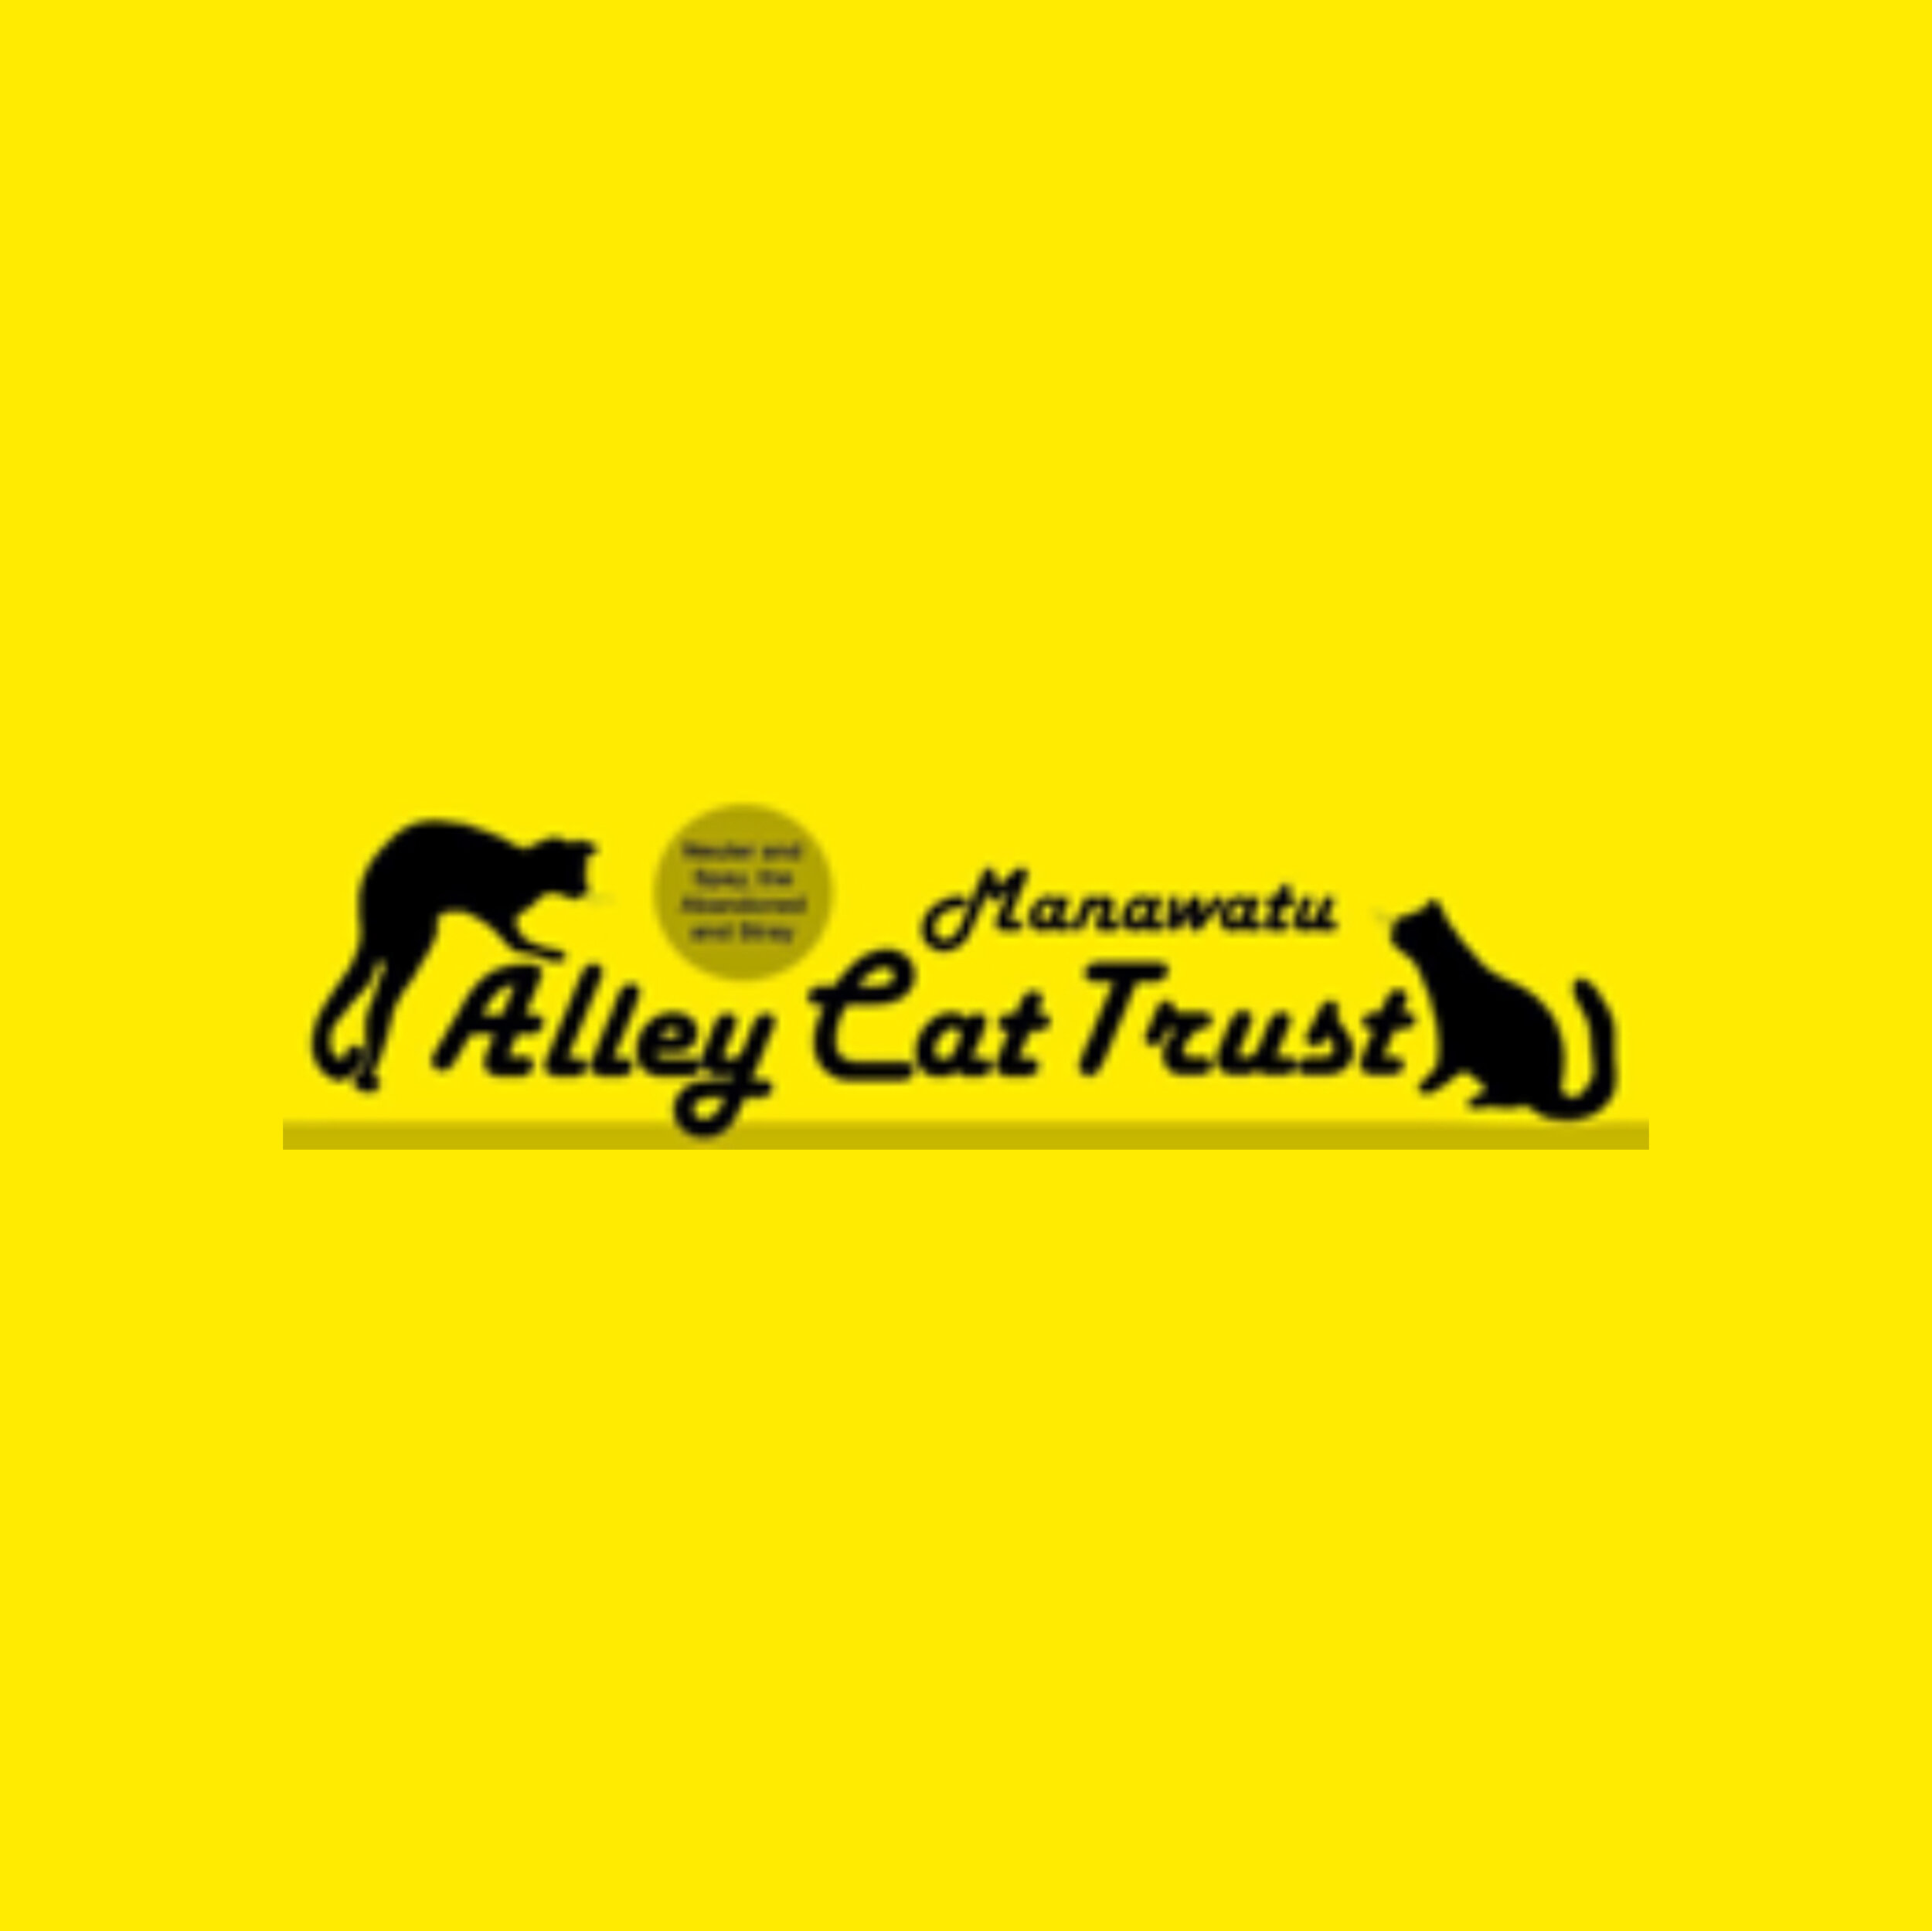 Manawatu Alley Cat Trust